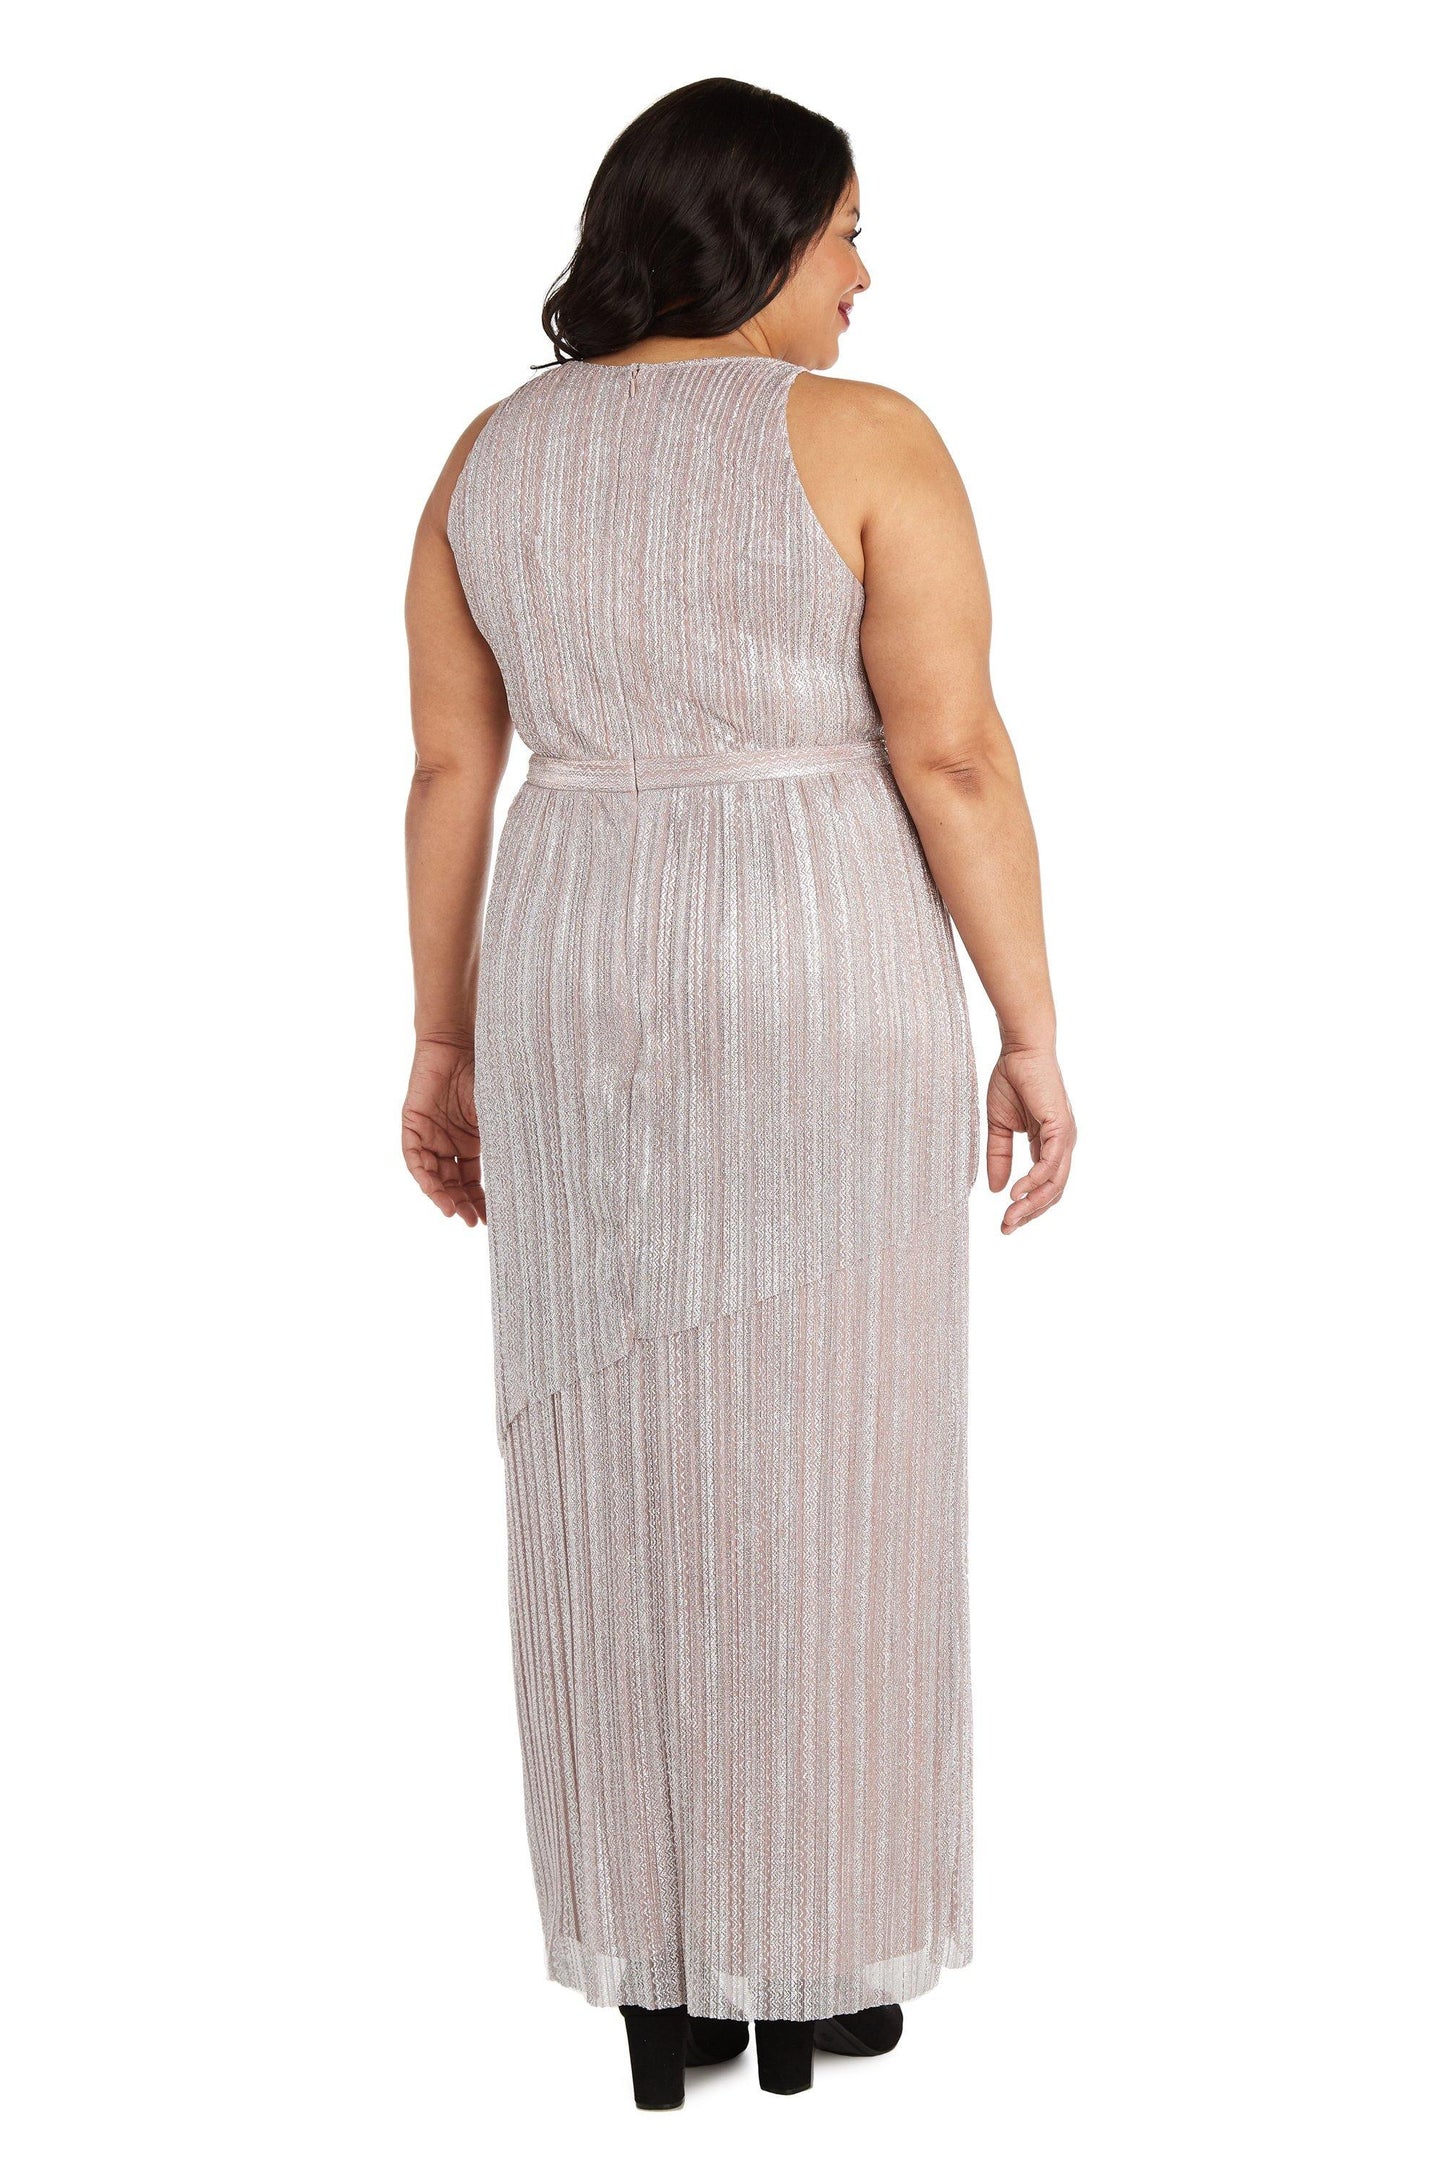 R&M Richards Long Formal Plus Size Dress 7208W - The Dress Outlet